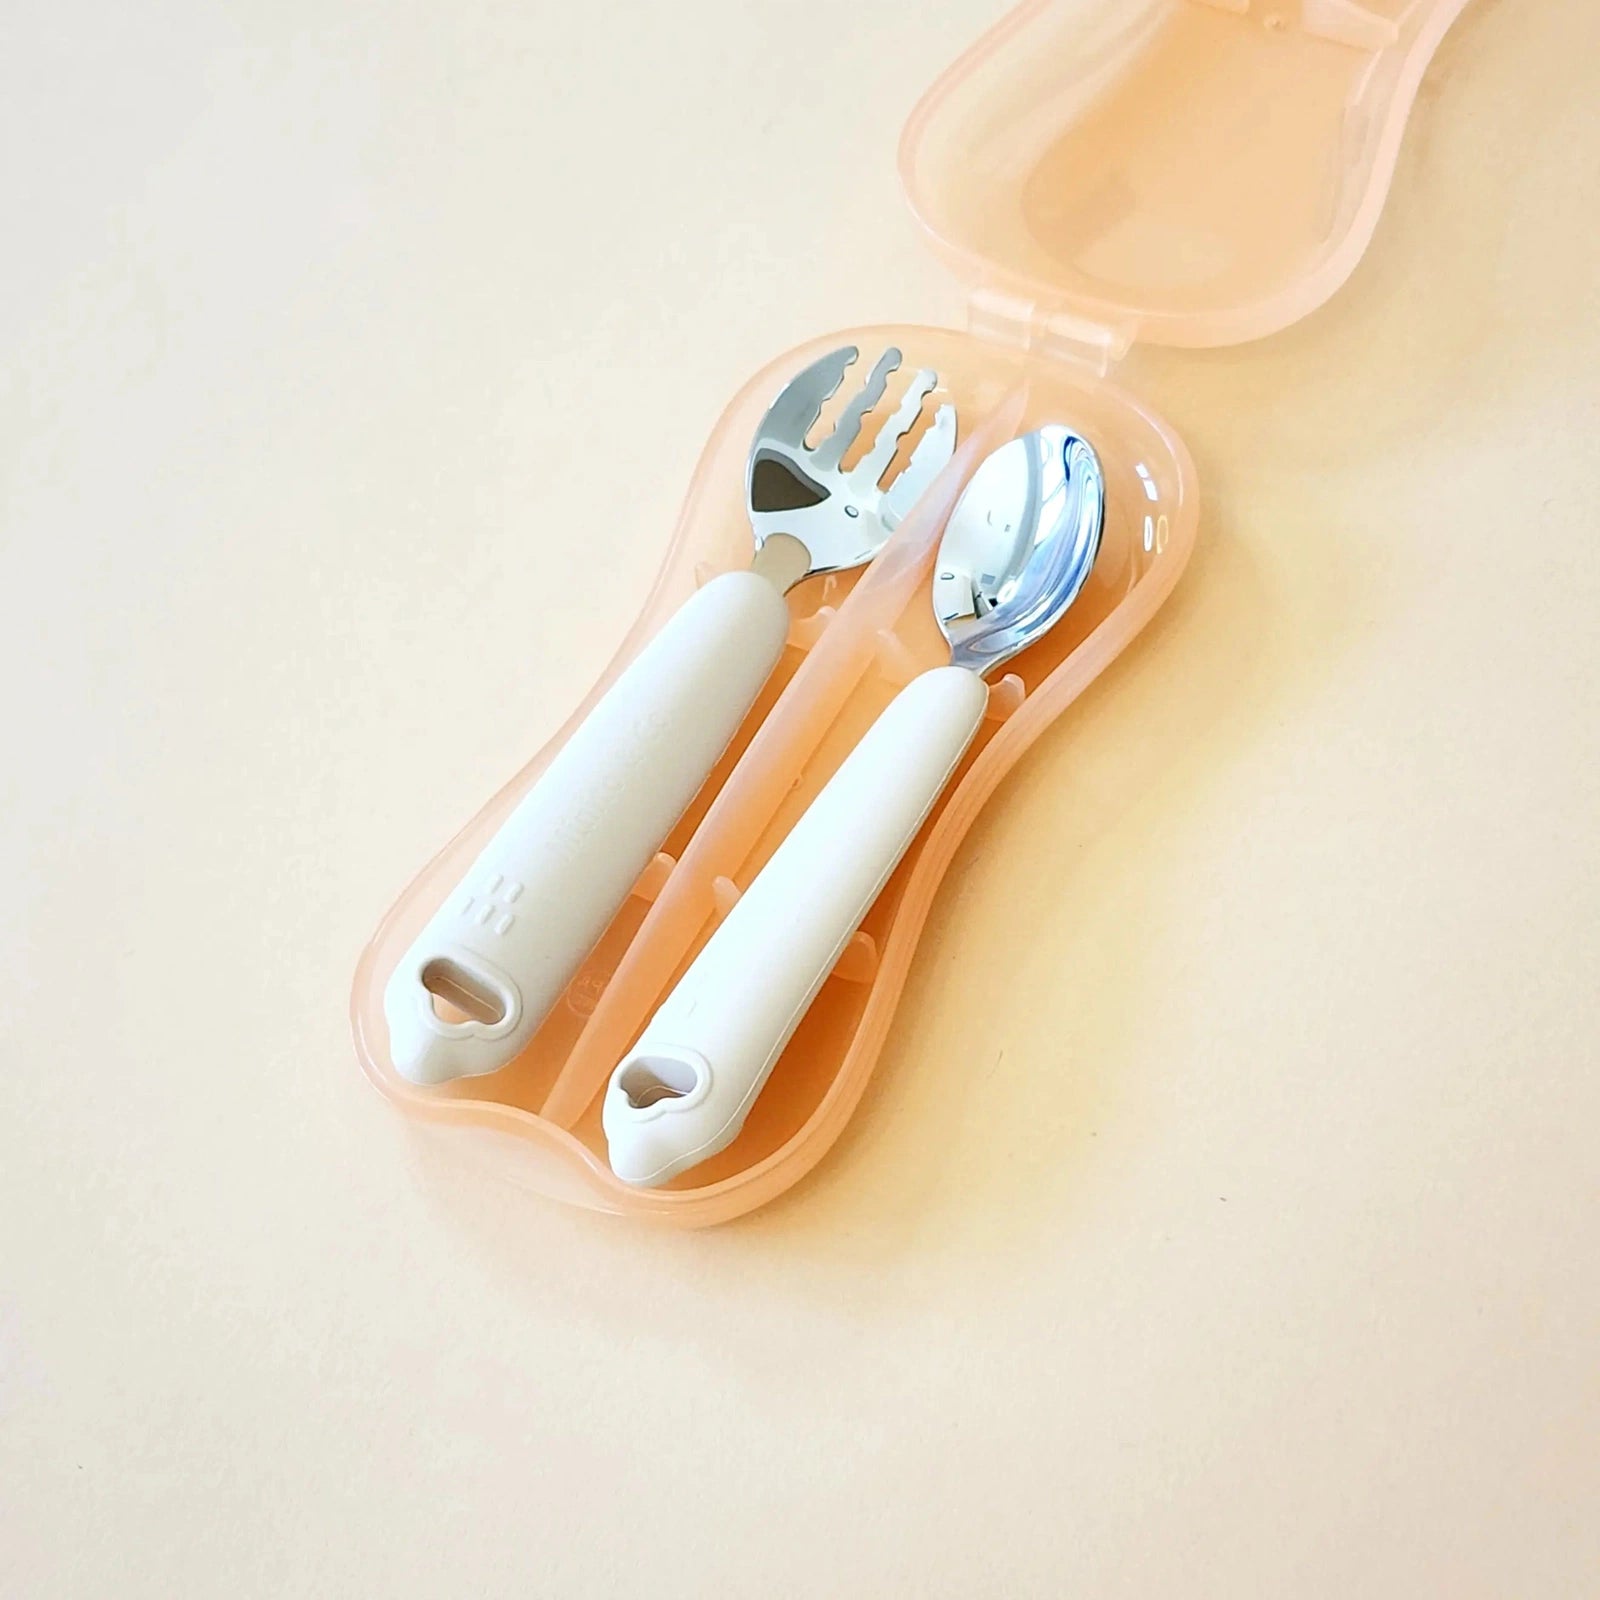 Toddler Utensils Baby Spoons & Baby Forks Set with Baby Utensils CASE, Toddler